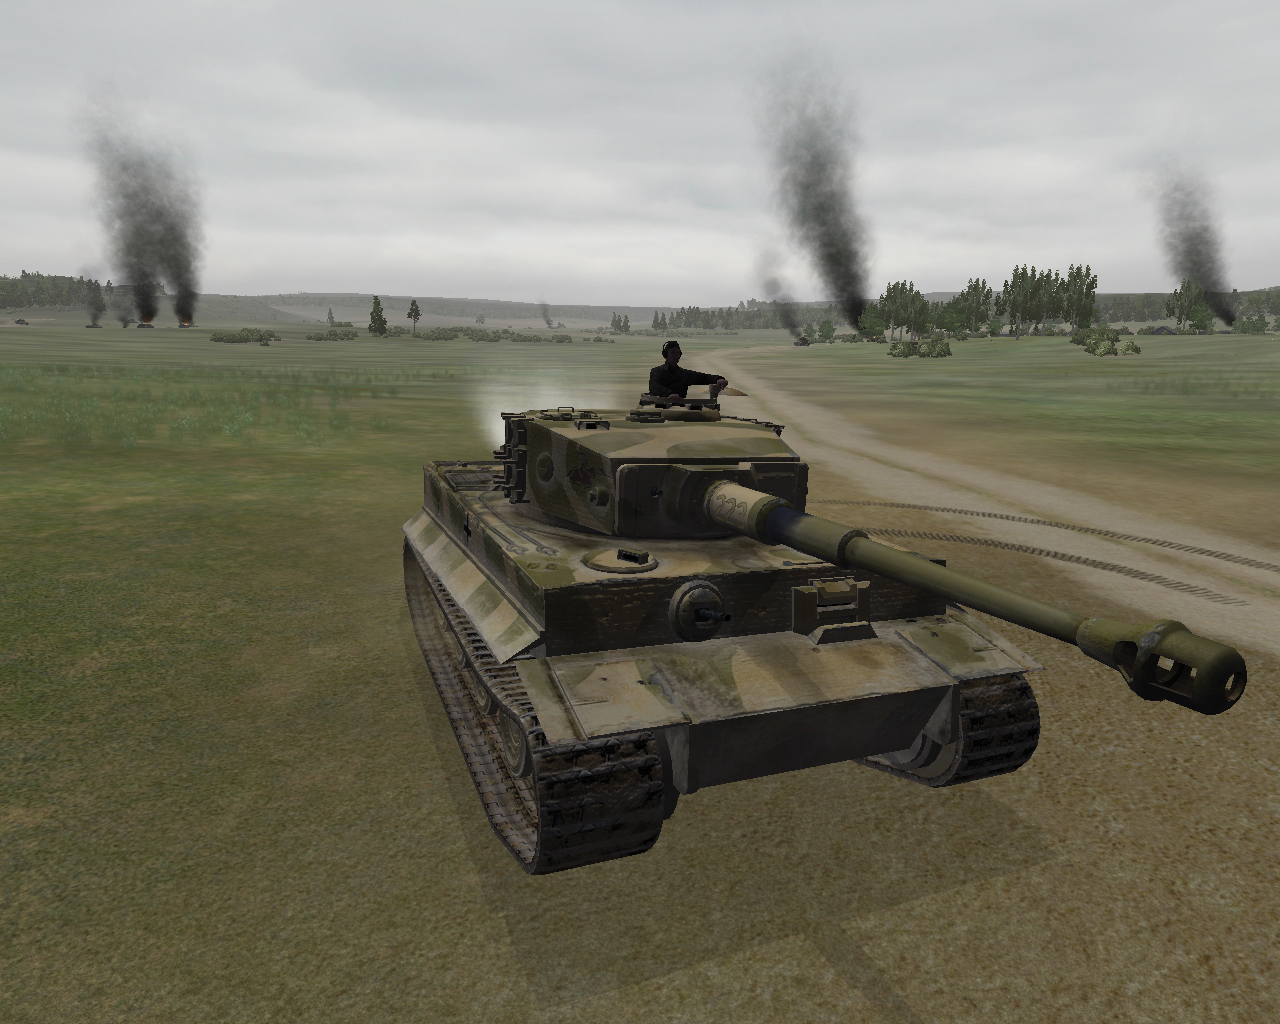 ww2 battle tanks t 34 vs tiger reddit